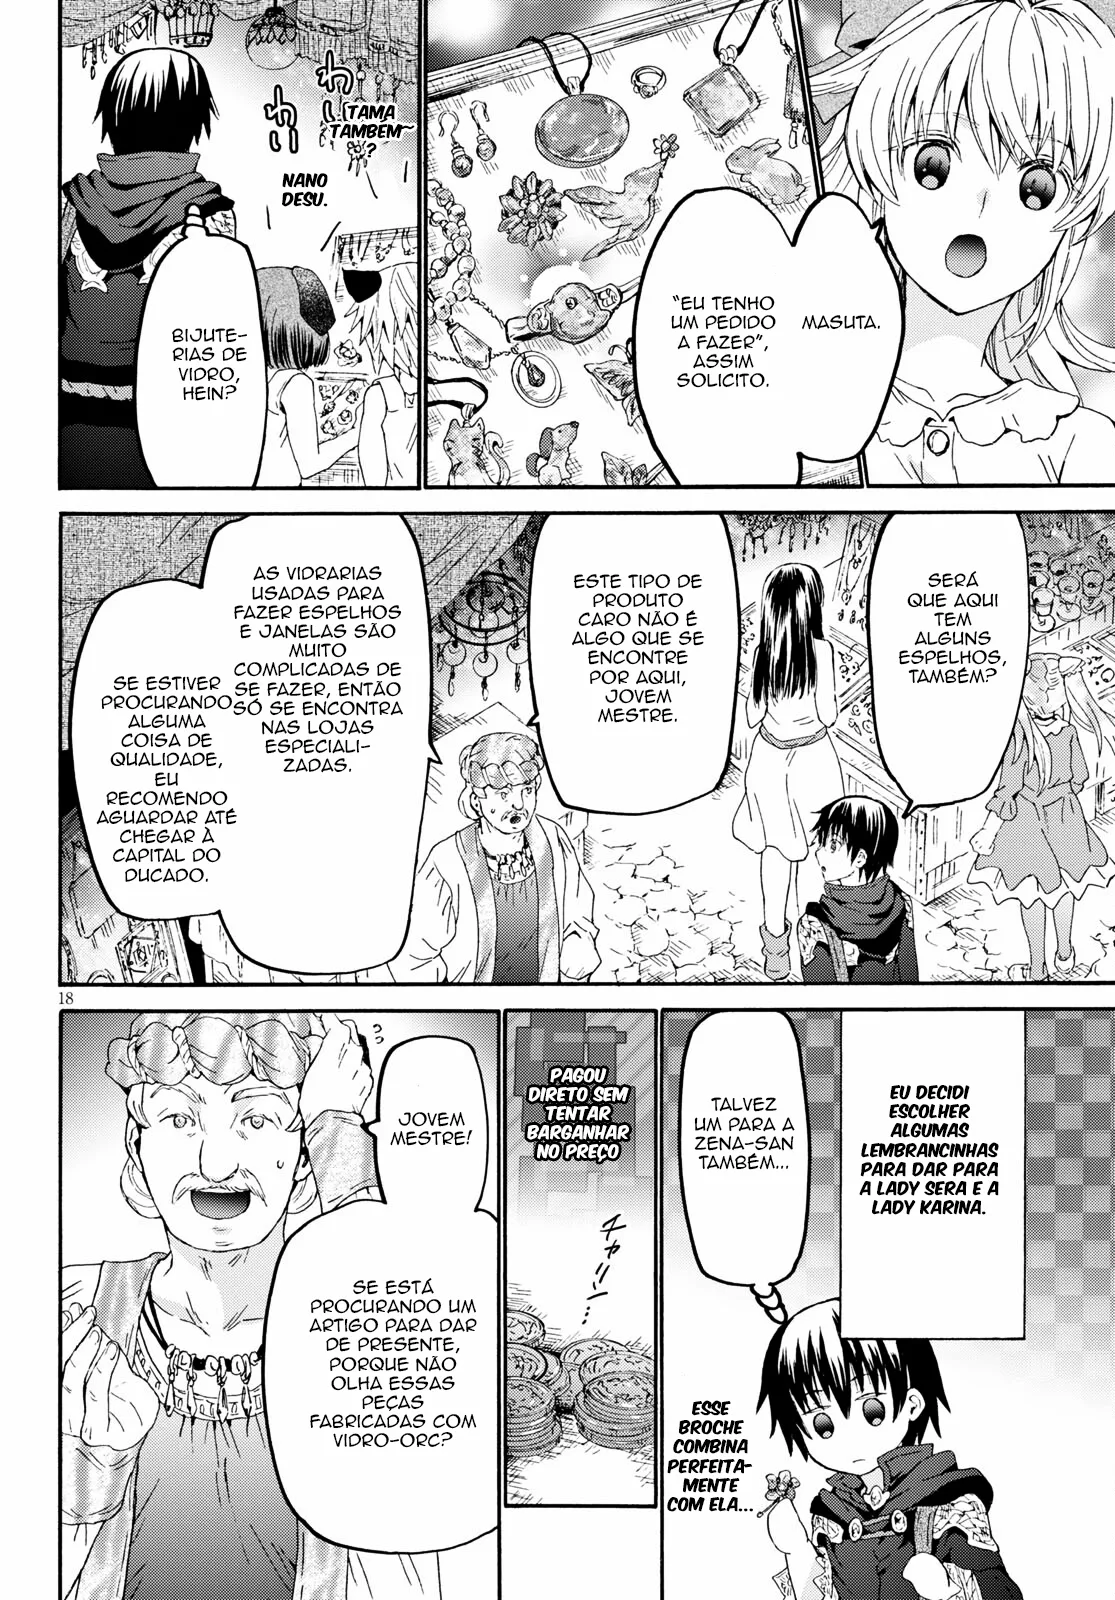 Comic Dragon Age: Death March Kara Hajimaru Isekai Kyousoukyoku / Death March To The Parallel World Rhapsody Manga 85